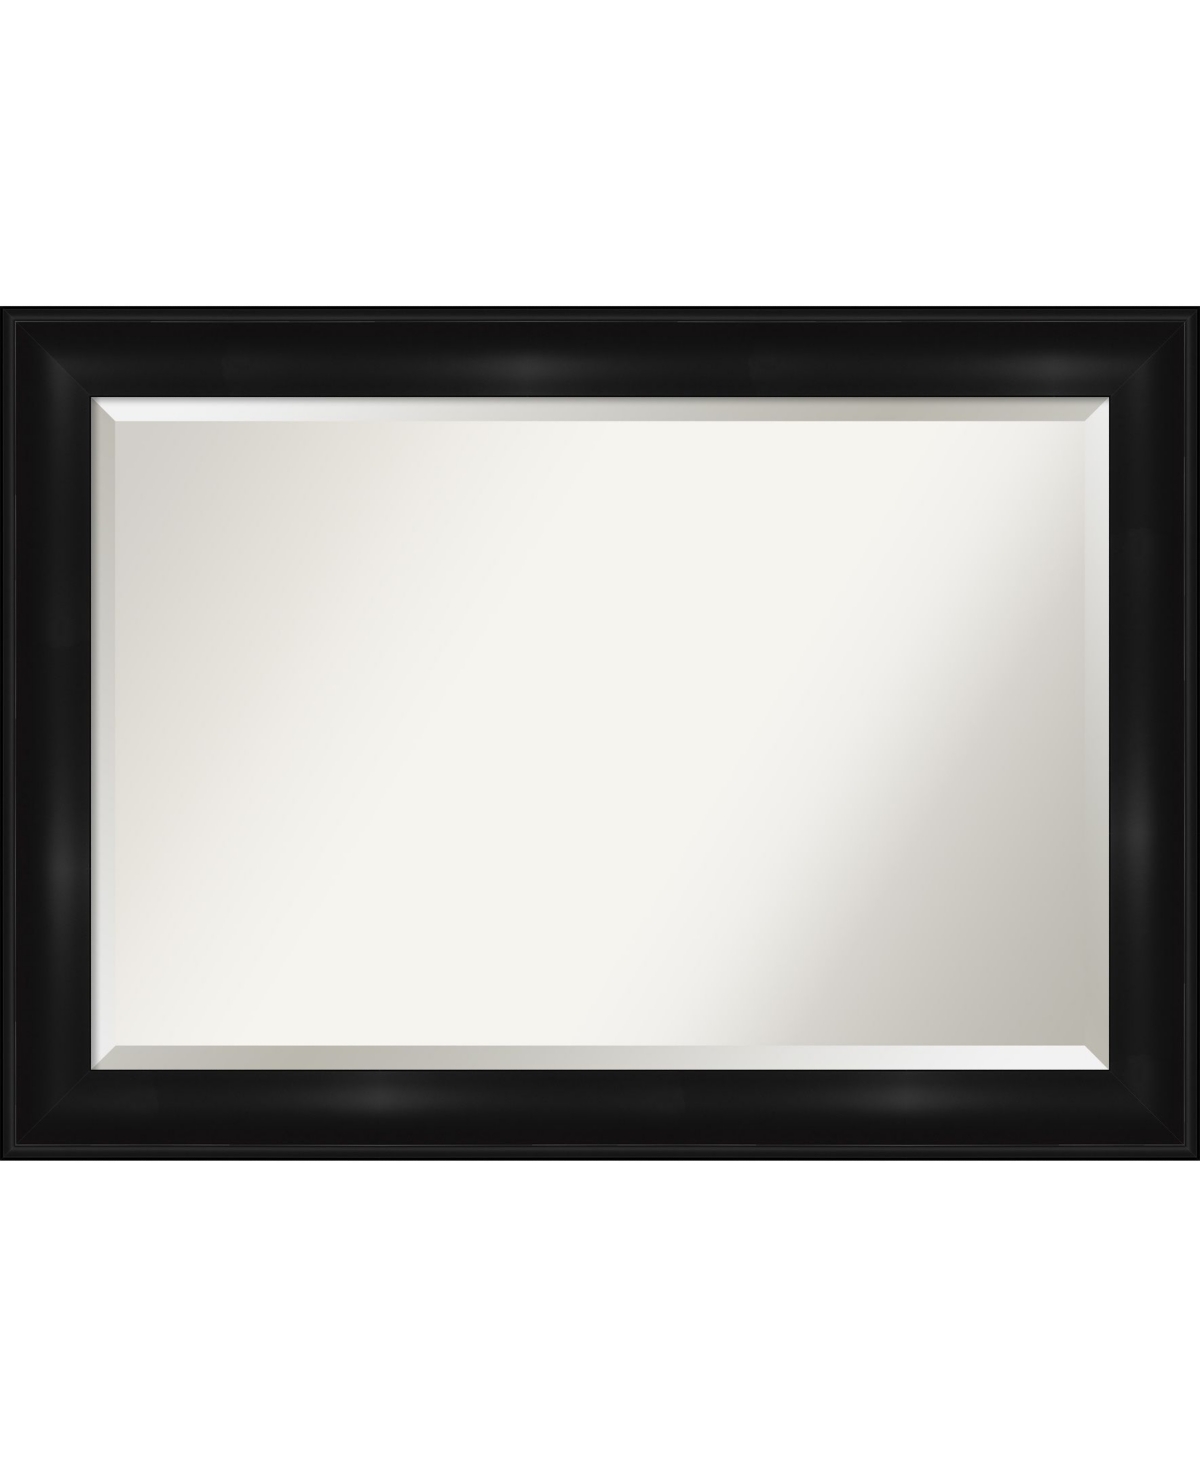 Grand Framed Bathroom Vanity Wall Mirror, 41.75" x 29.75" - Black